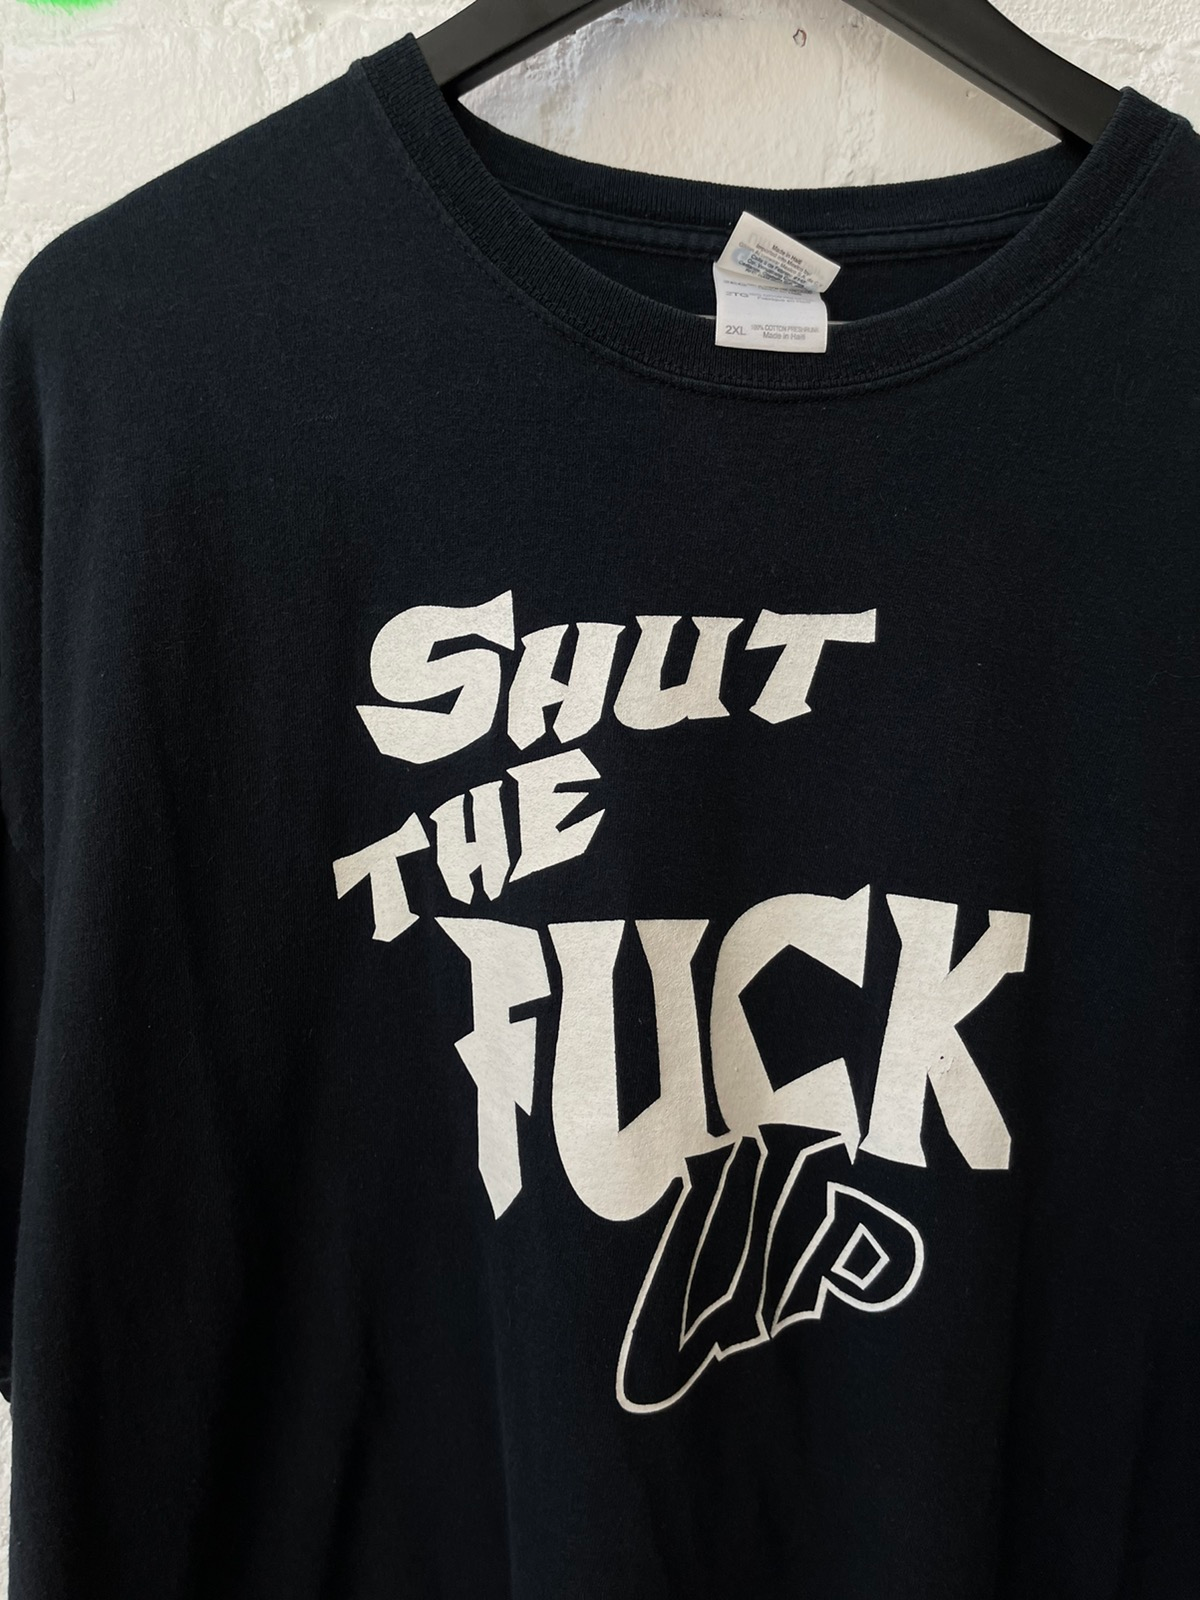 Vintage SHUT THE FUCK UP Shirt 4Gseller